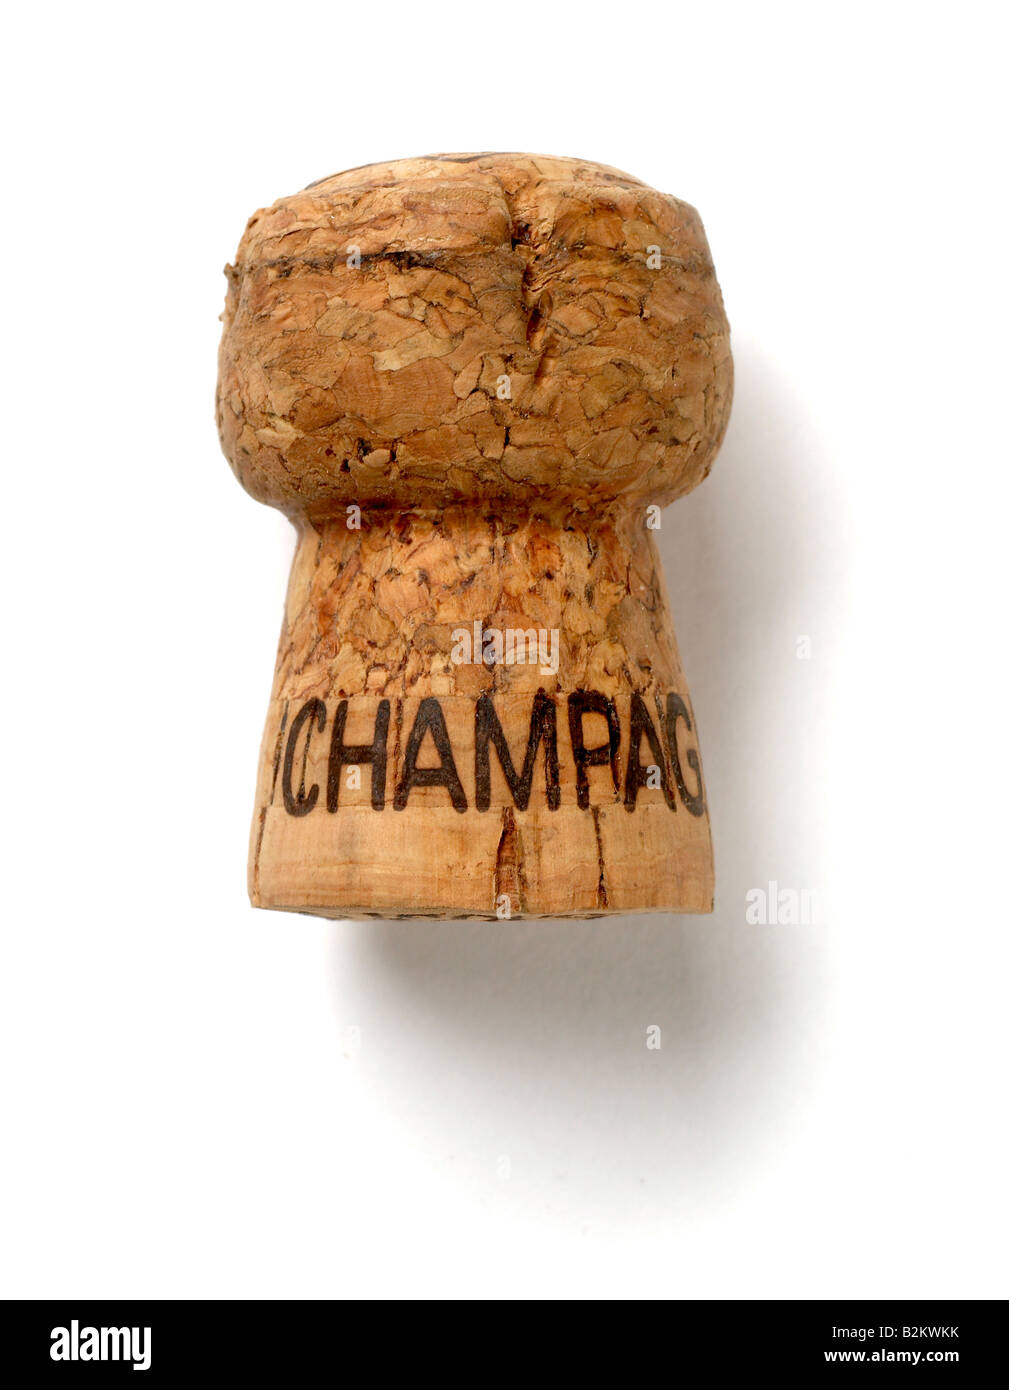 Champagne bottle cork Stock Photo - Alamy